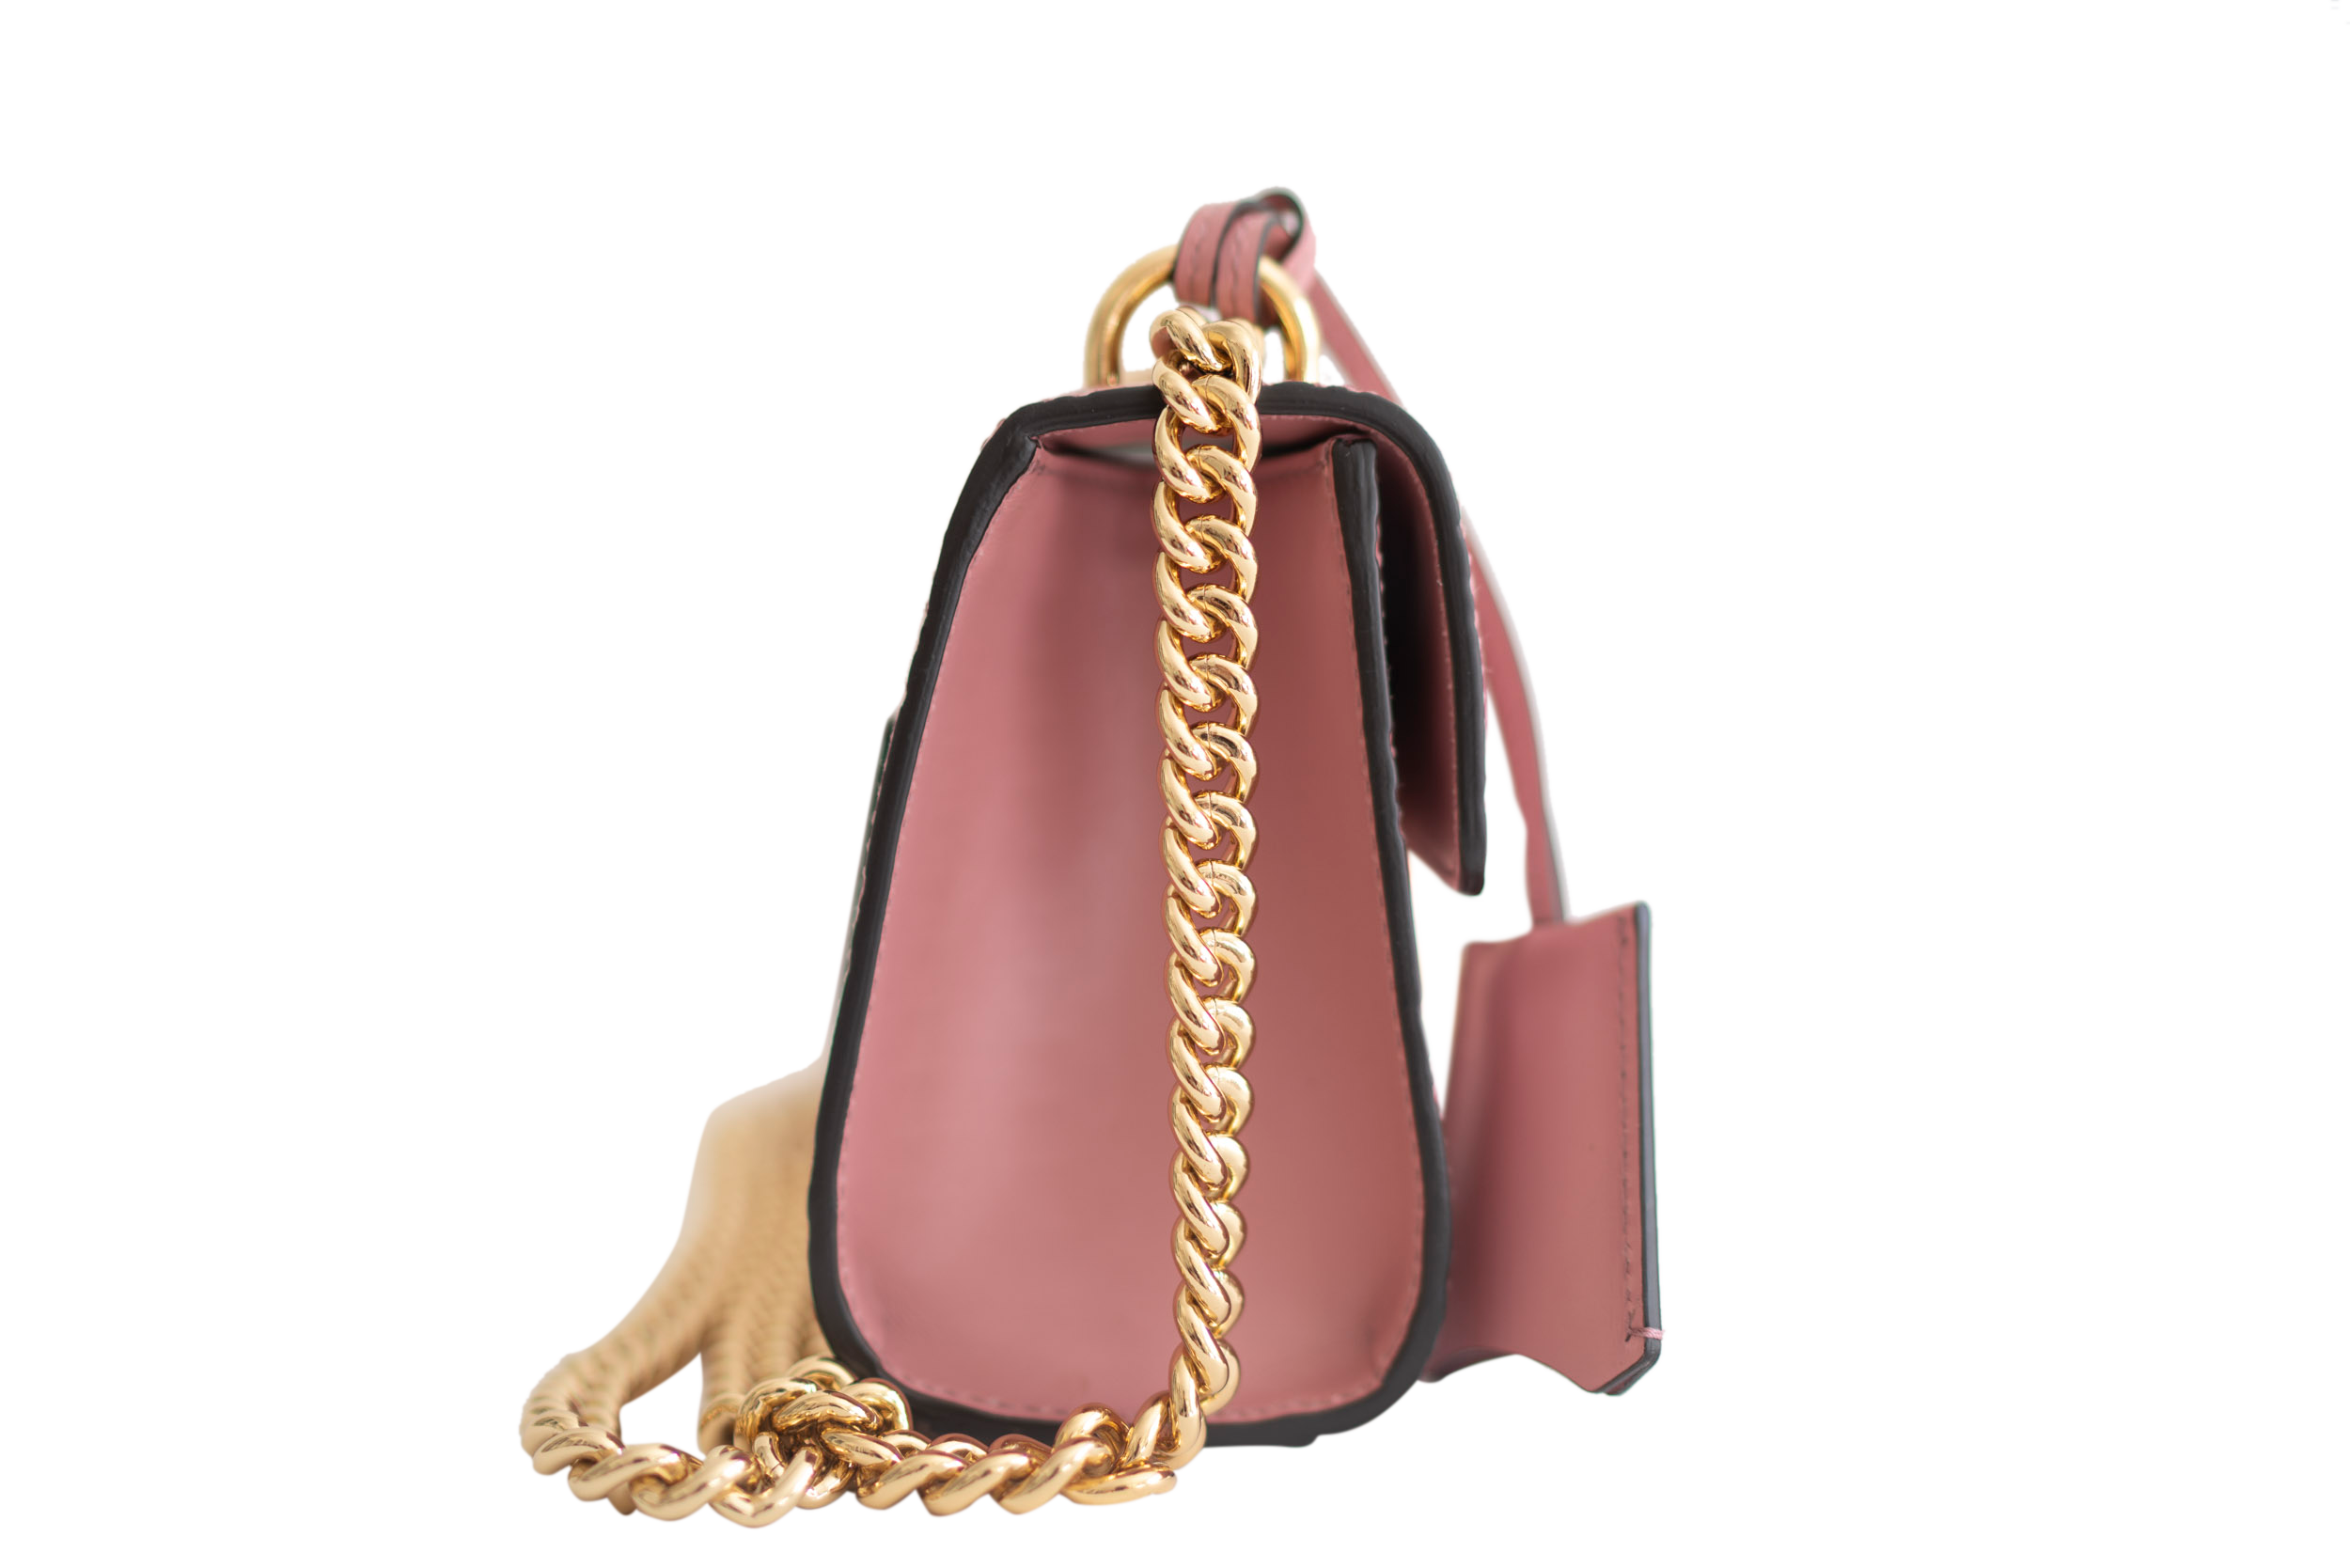 Padlock Small Shoulder Bag By Gucci | Online Gucci Bag Rental